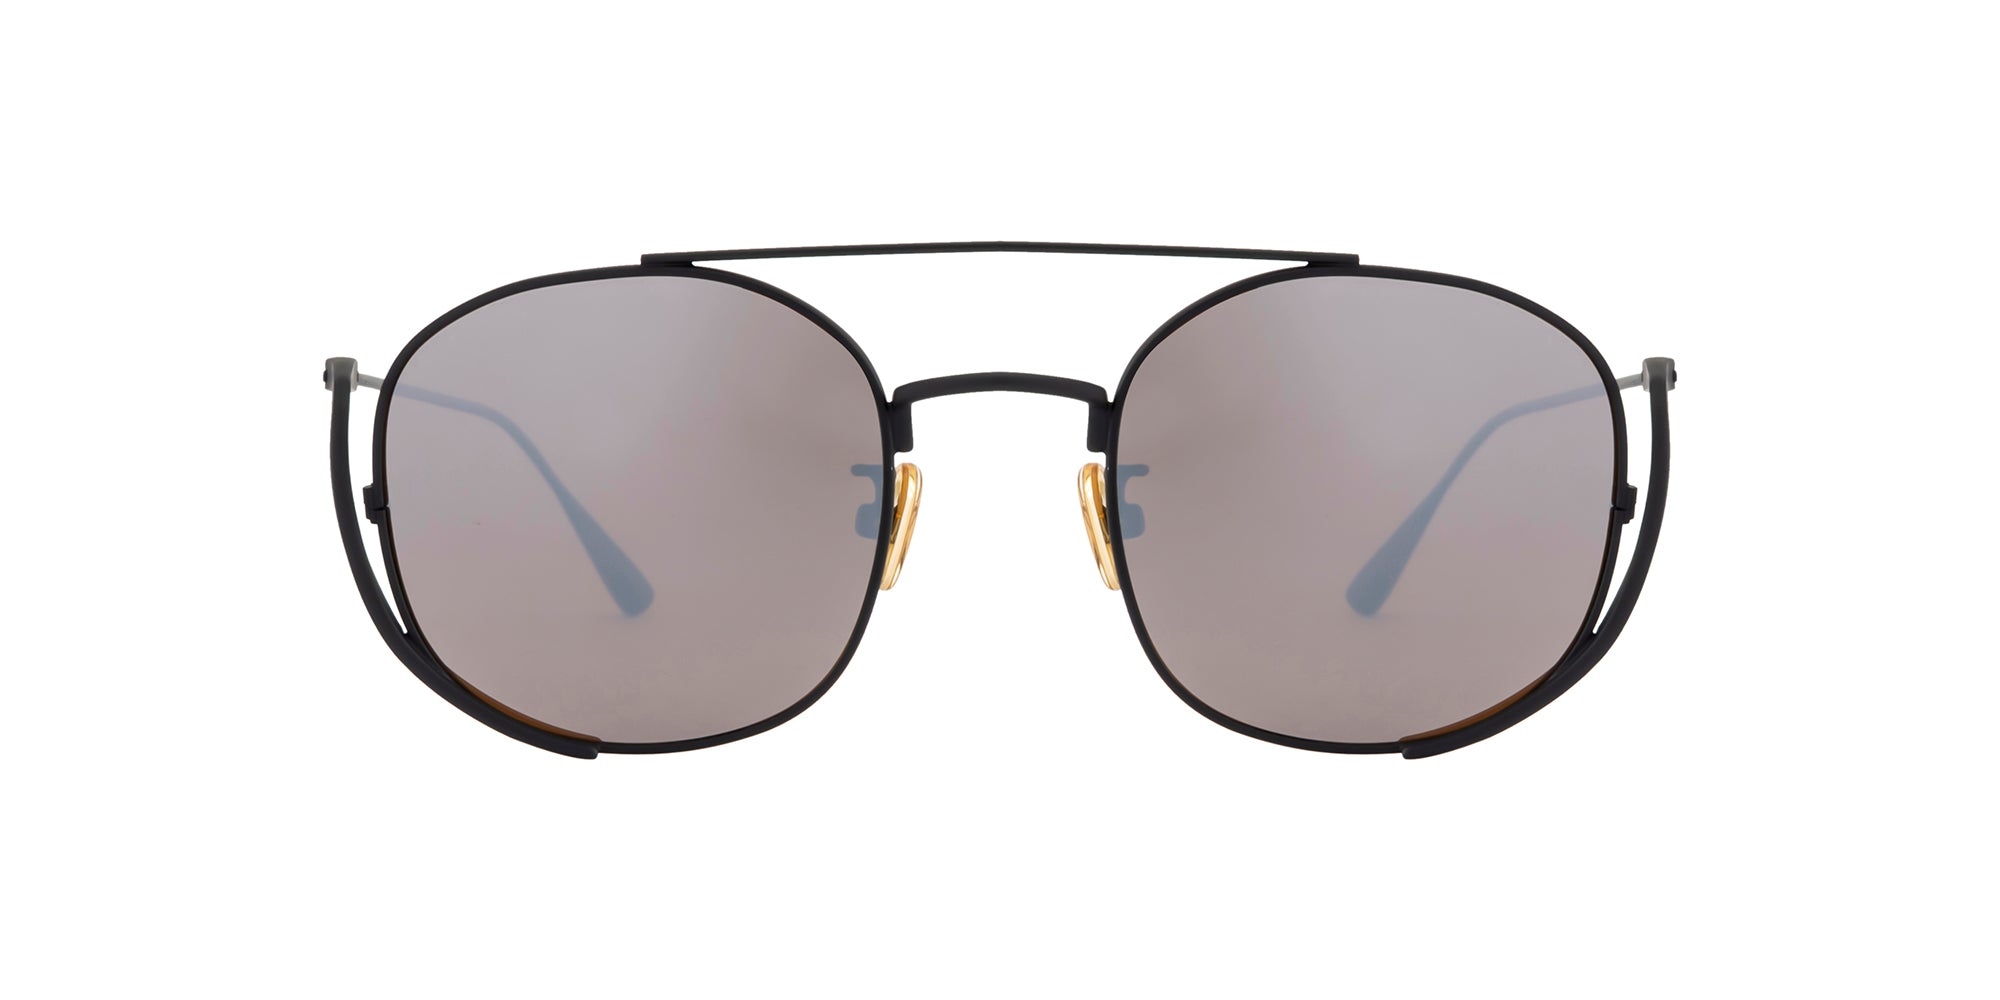 Velocity Polarized Eyewear Sunglasses Series